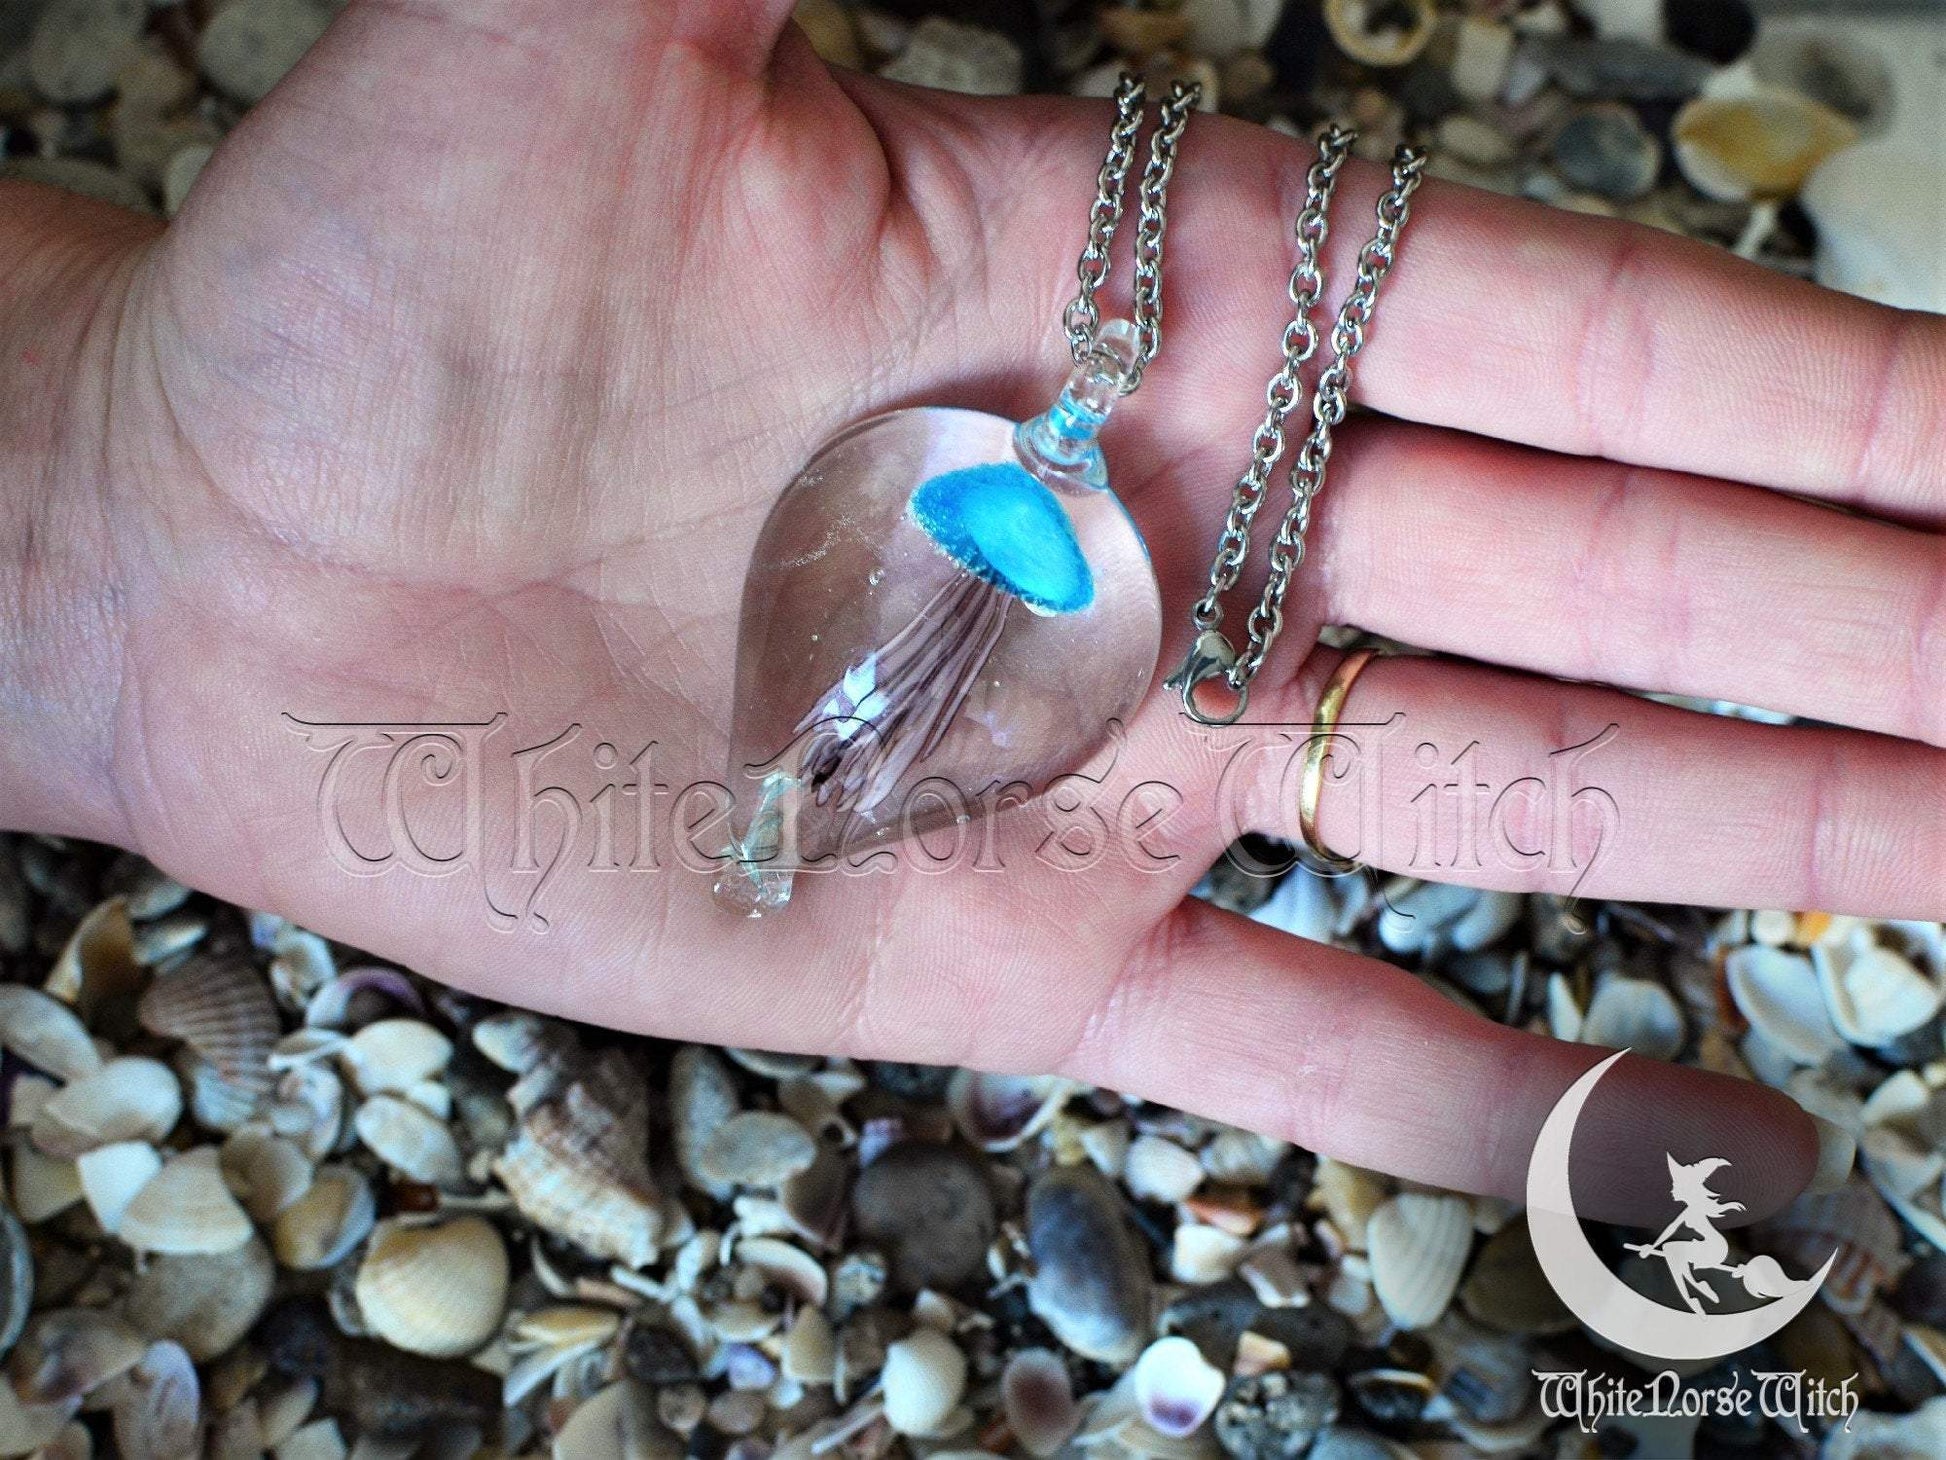 12 Pcs Crystal Mushroom Pendant Pendant for Jewelry Making Charms for  Bracelets Making 